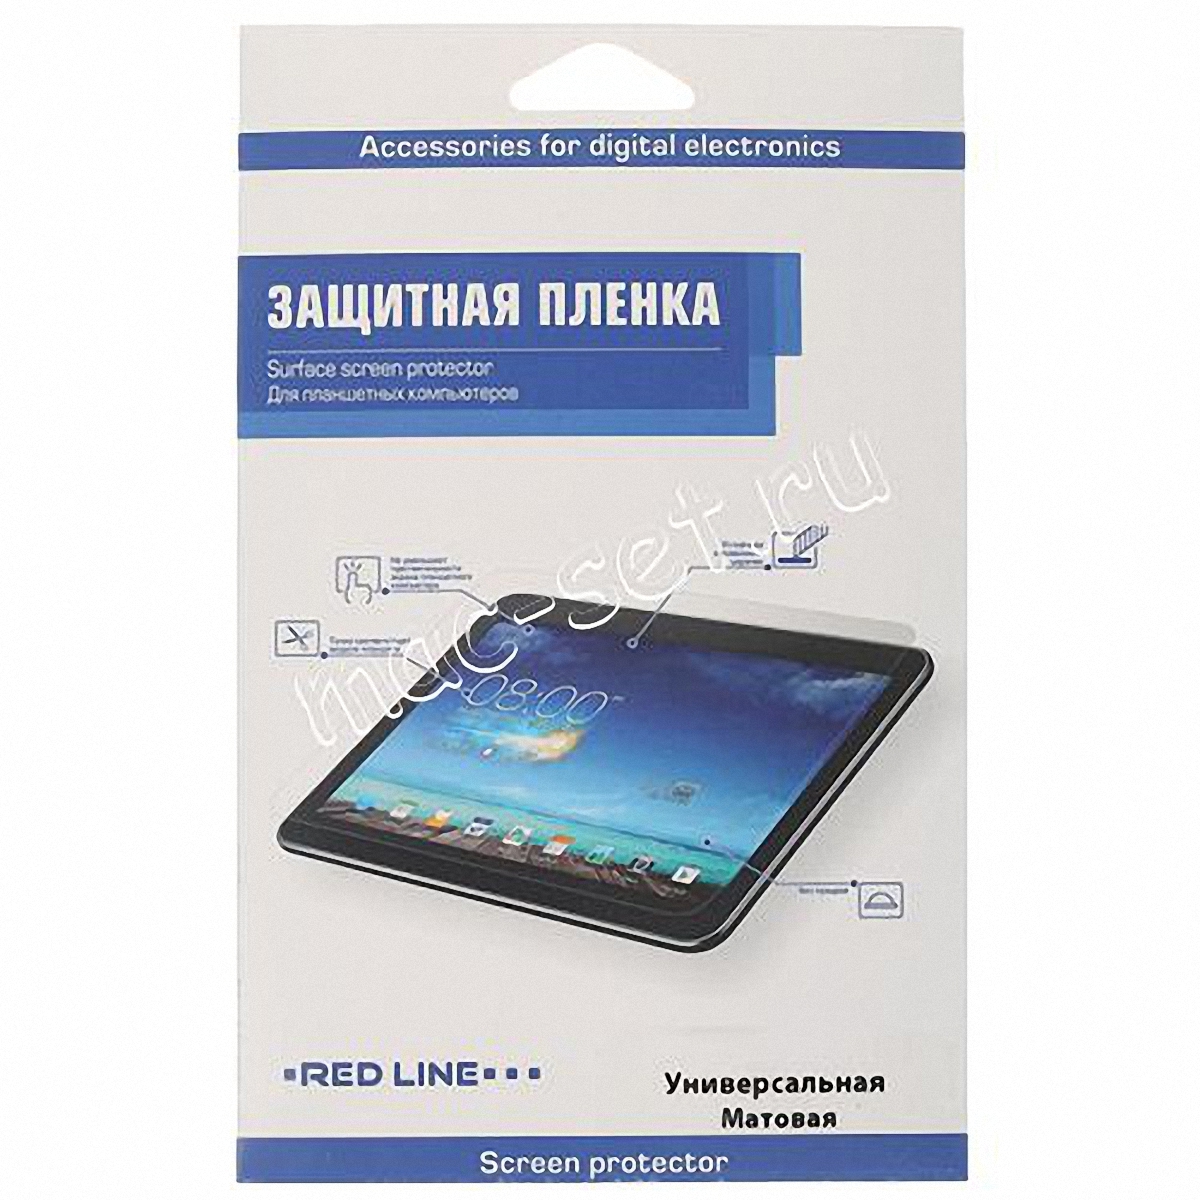 Lenovo Tab 4 TB-x304l. Пленка защитная Red line Samsung Galaxy Tab s3 9.7" матовая ут000011368. Redline защитная пленка универсальная 7 дюймов. Стилус дляпланшет Lenovo Tab 4 для девочек.. 20 9 экран